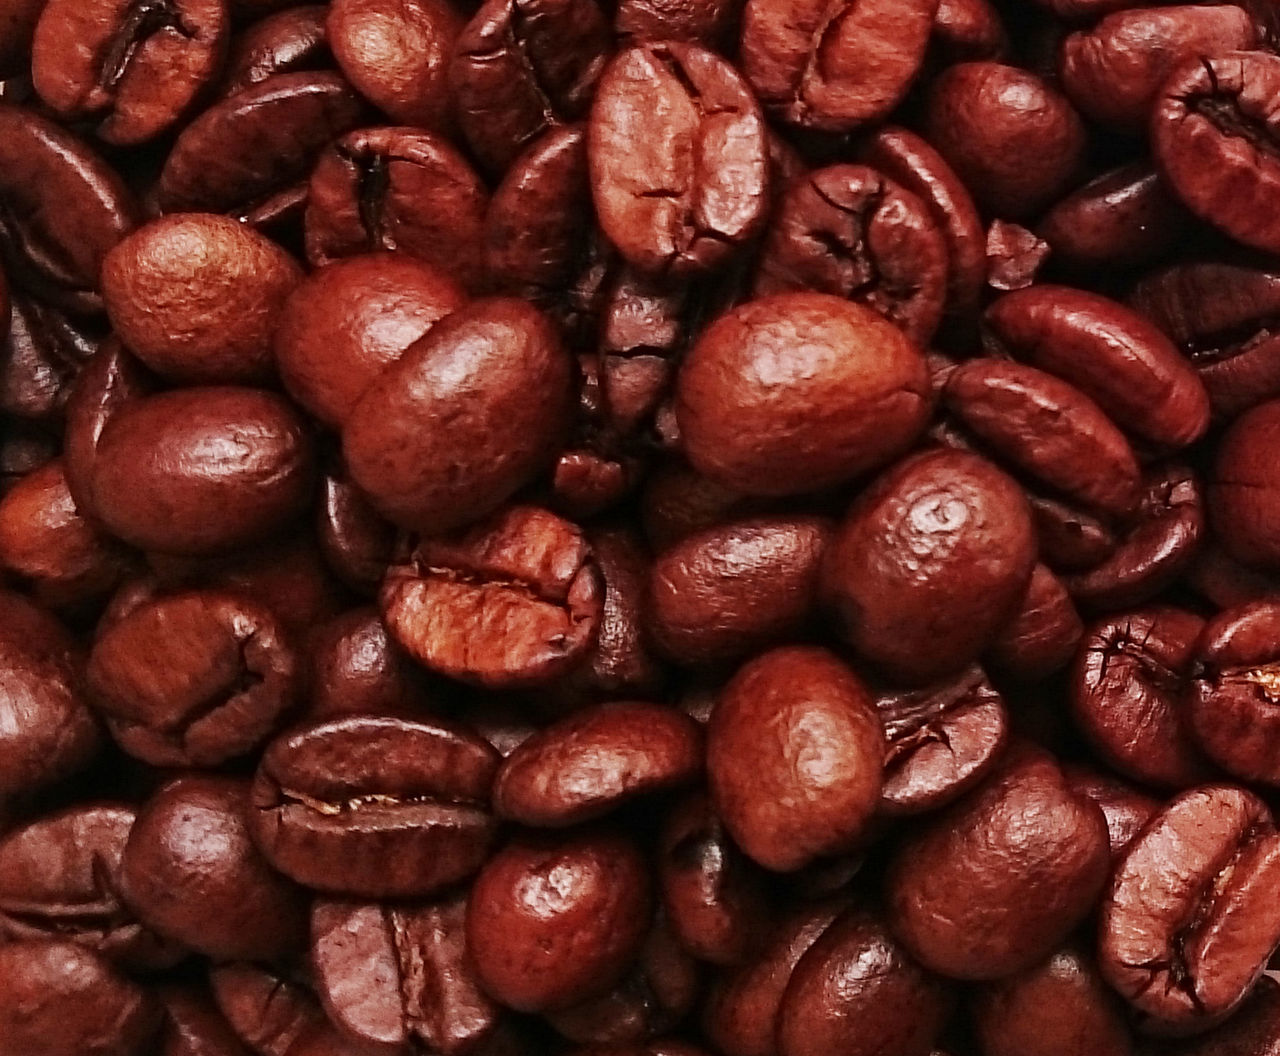 FULL FRAME SHOT OF ROASTED COFFEE